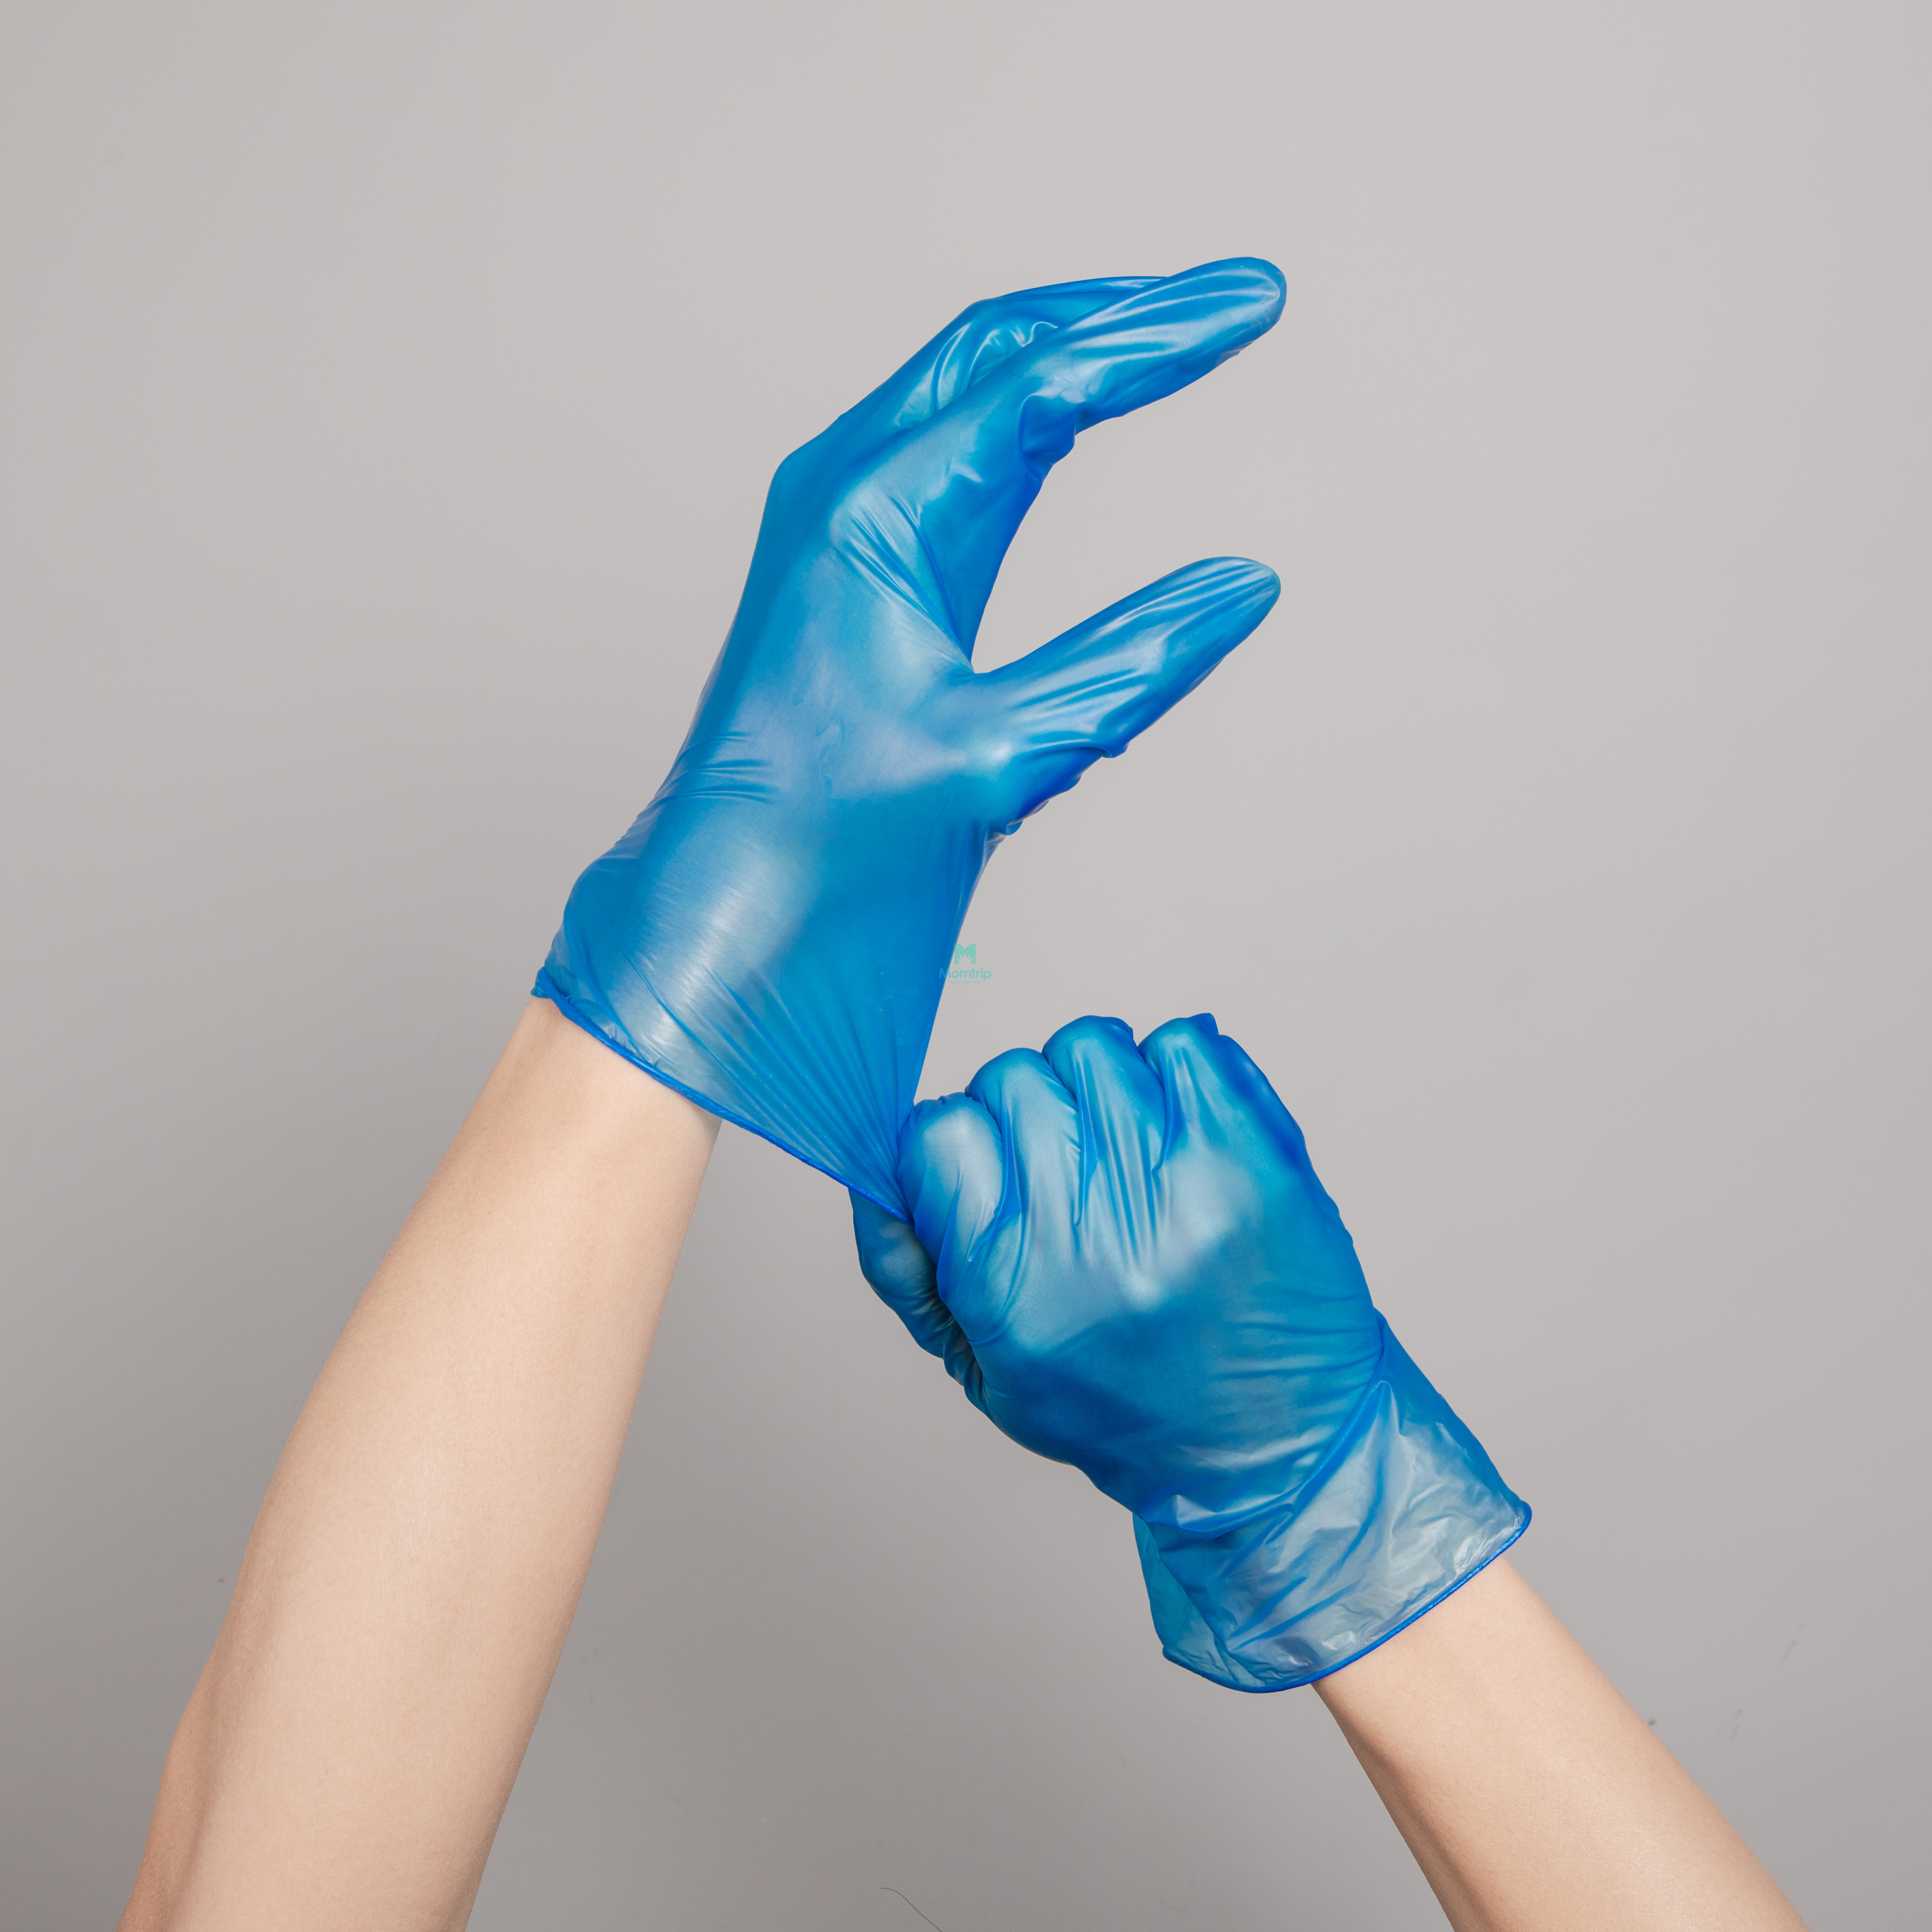 Wholesale Protective Powder Free Vinyl Disposable Examination Safety Gloves